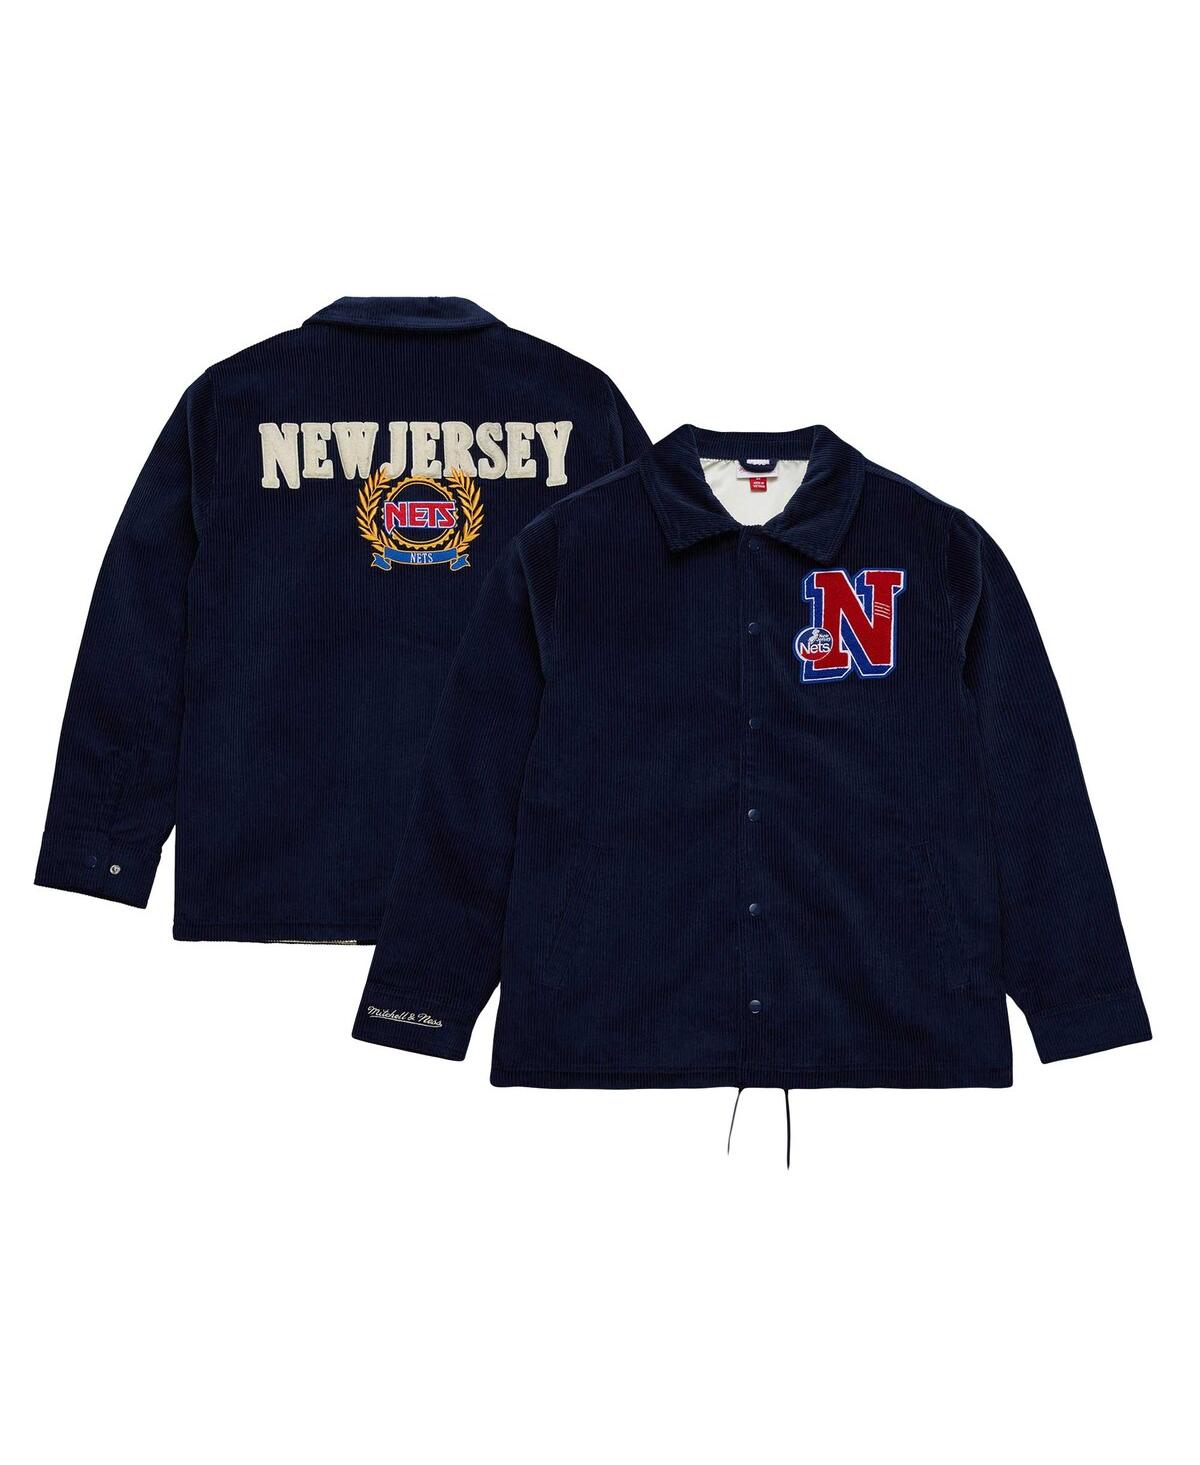 Men's Mitchell & Ness Navy New Jersey Nets Hardwood Classics Coaches Full-Snap Jacket - Navy